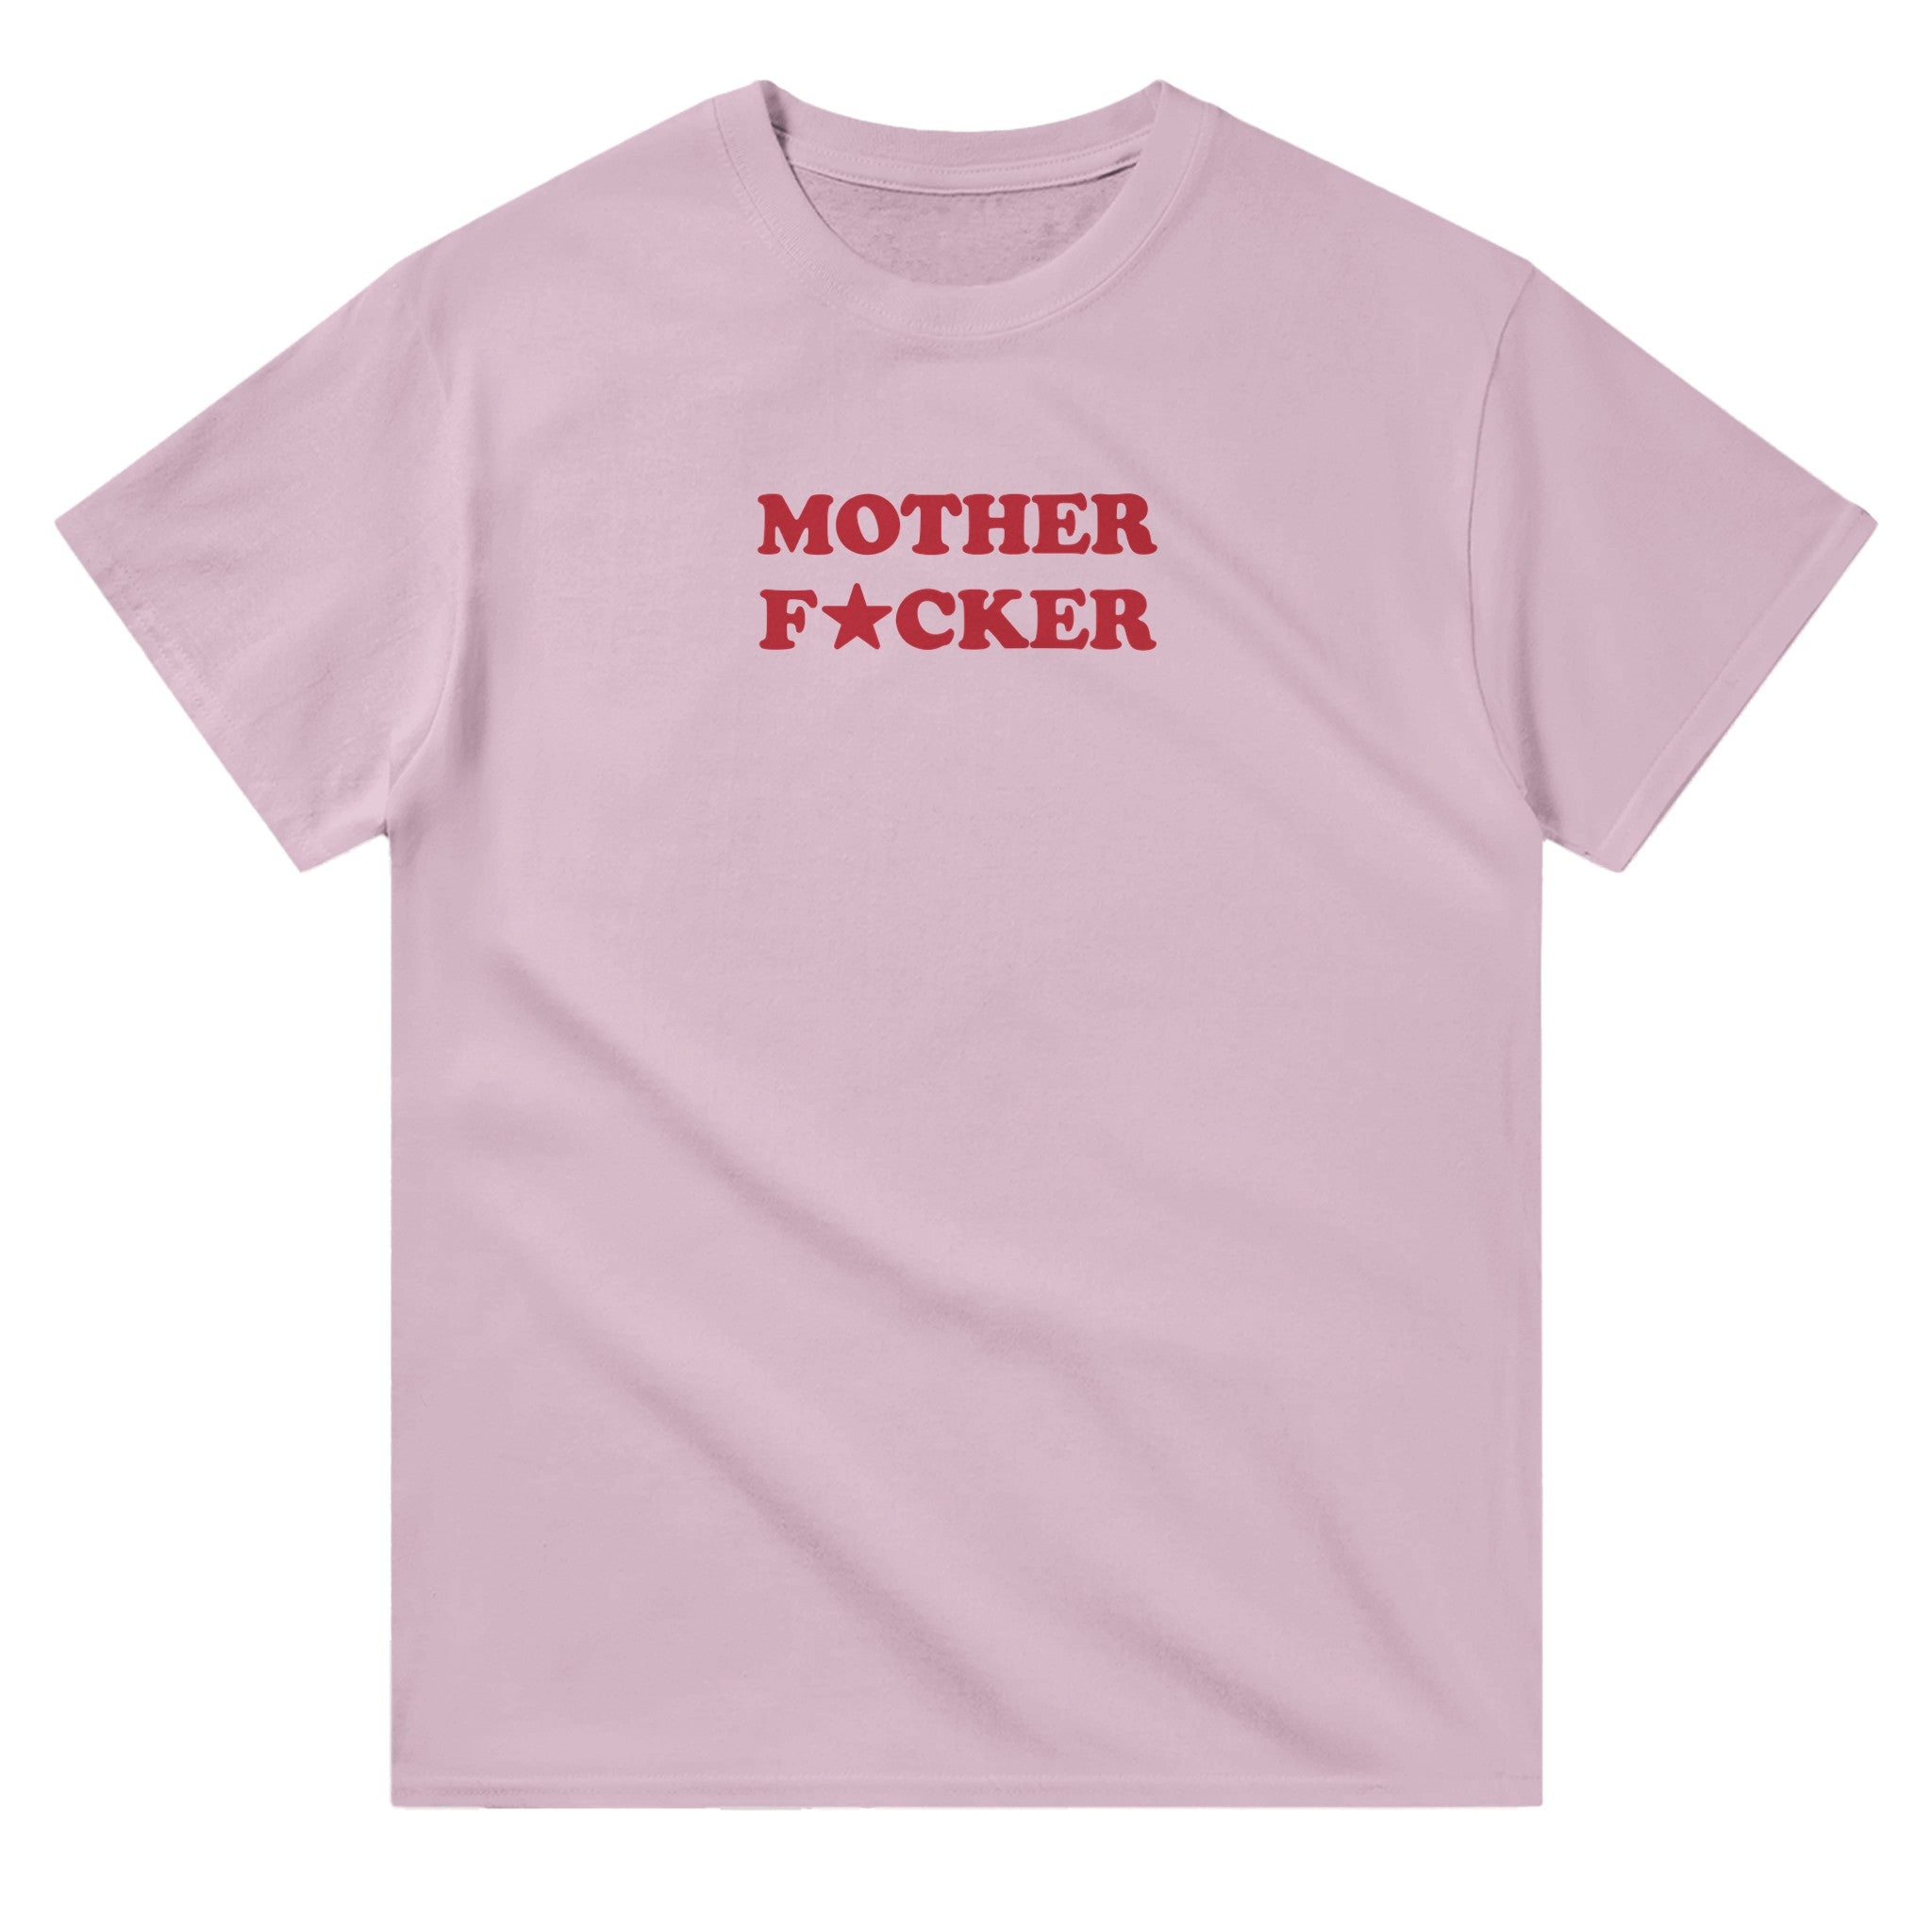 'Mother F★cker' classic tee - In Print We Trust